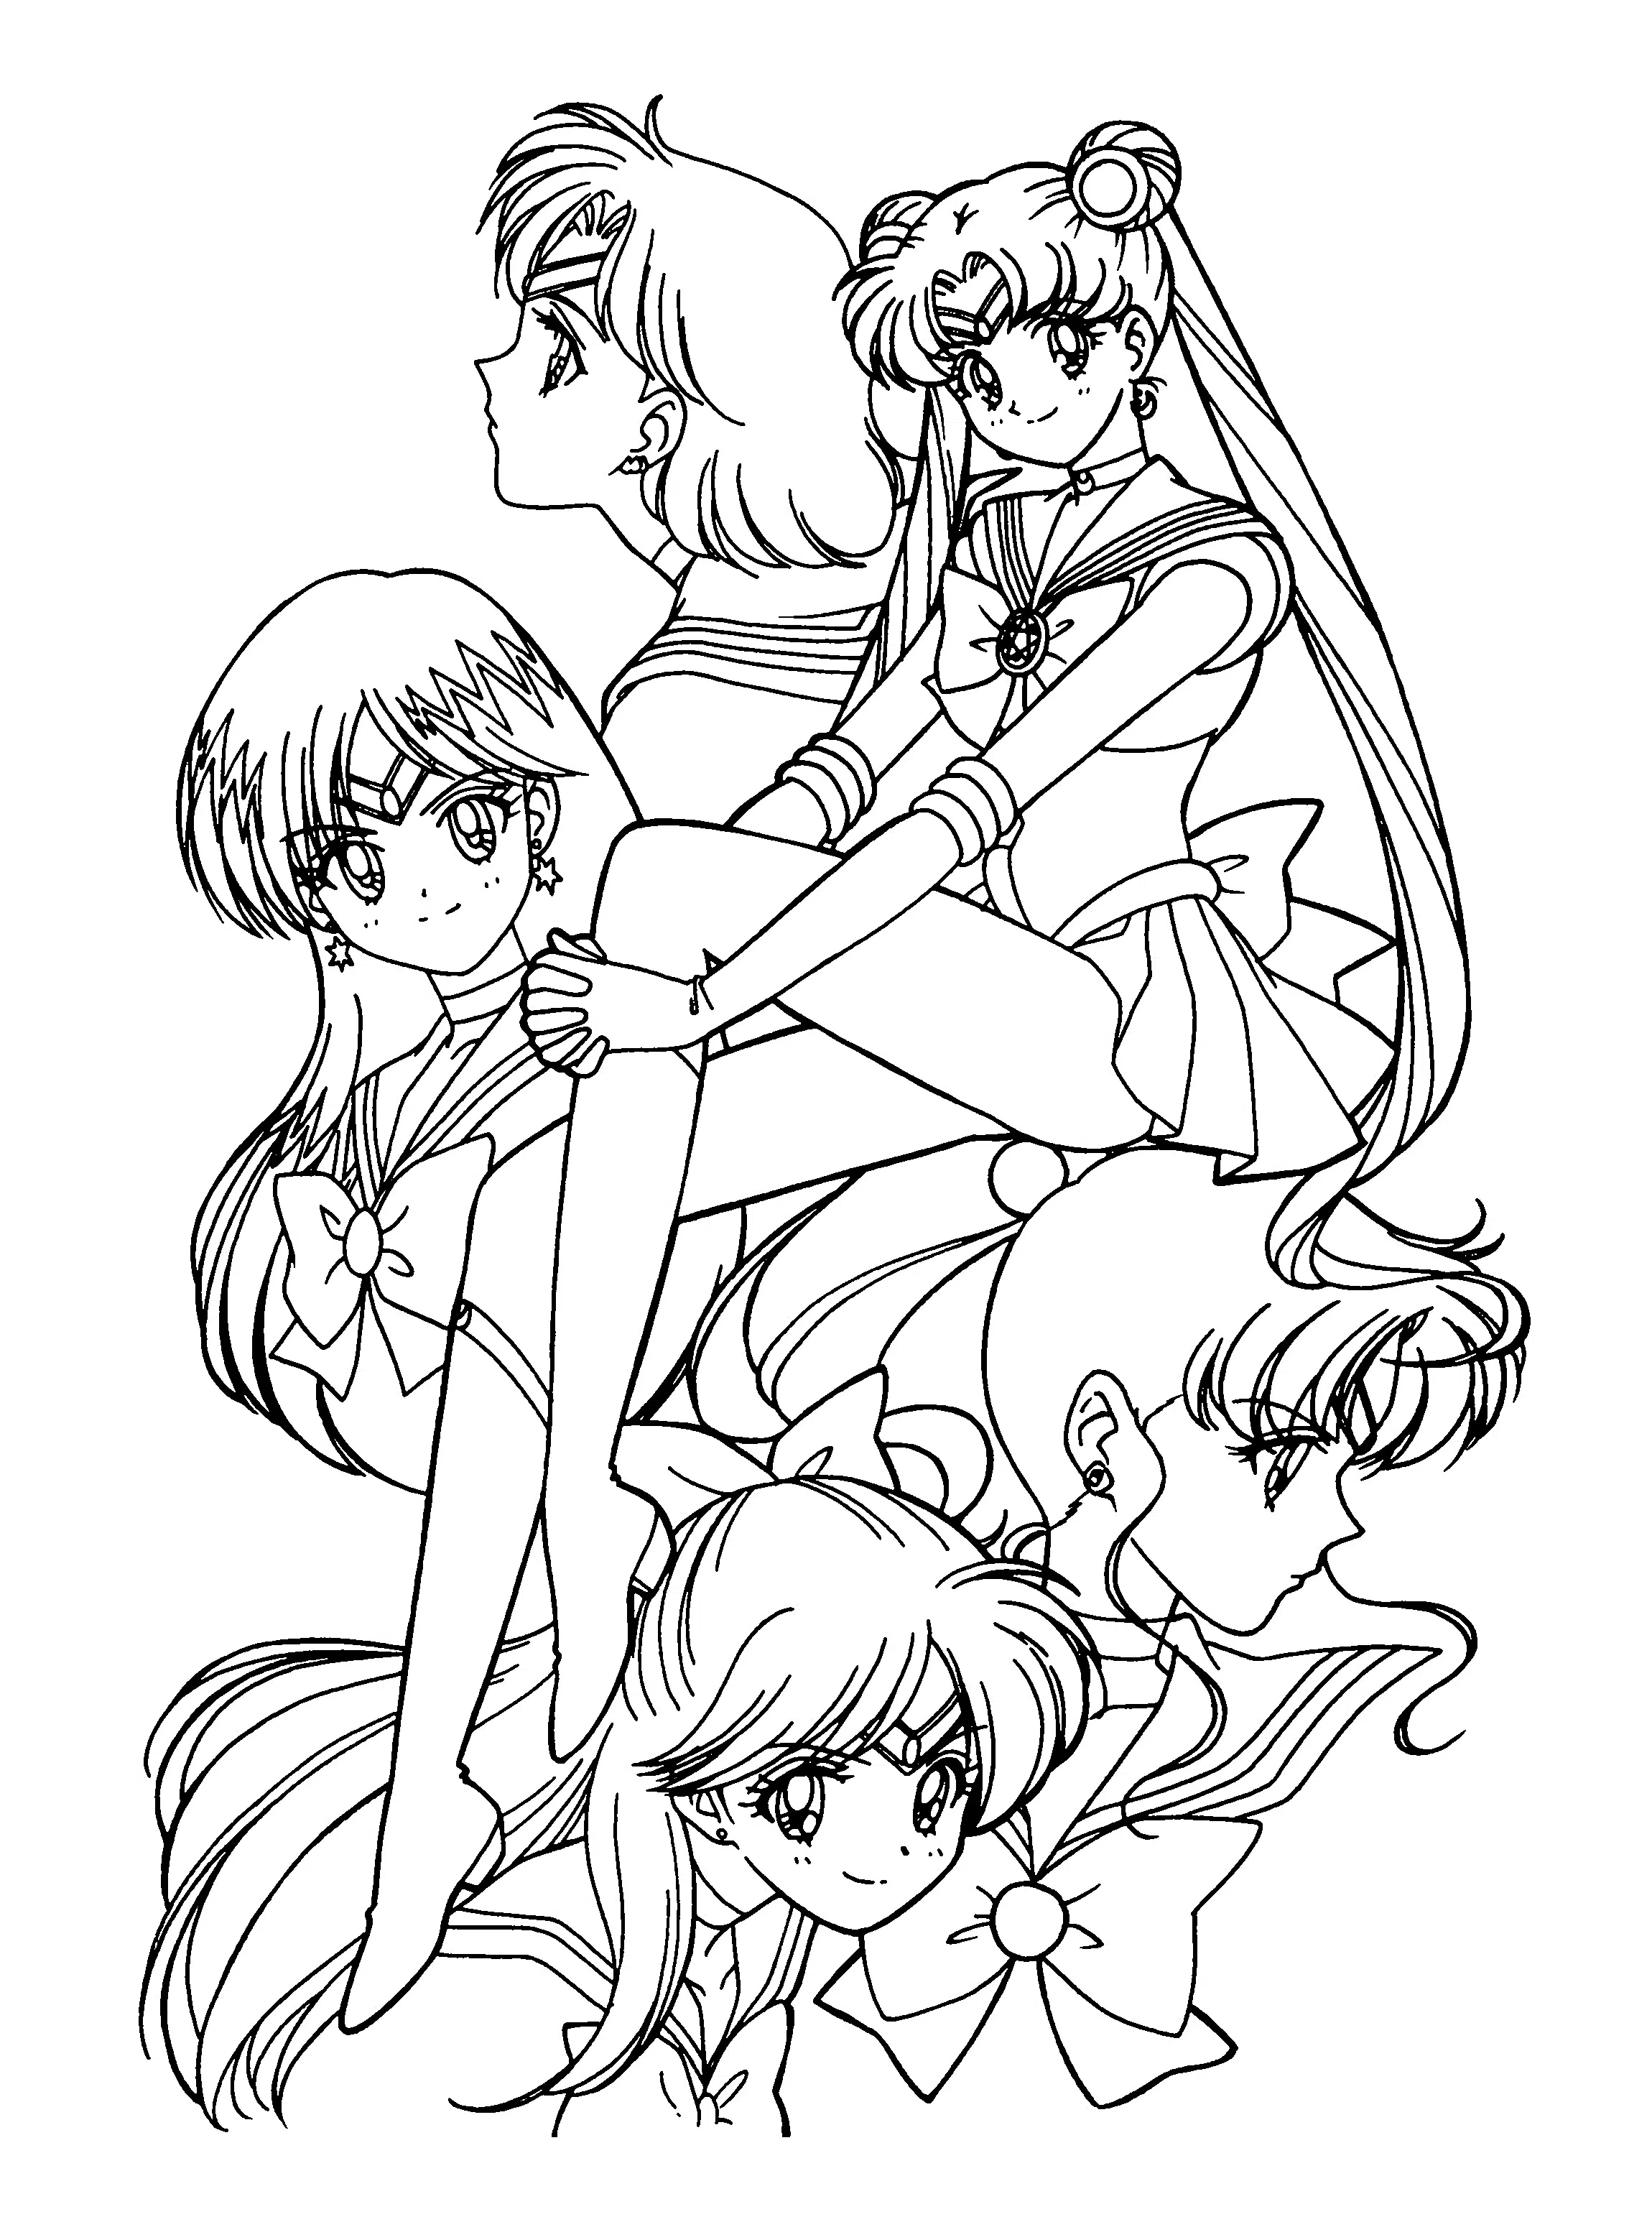 Sailor Moon 06